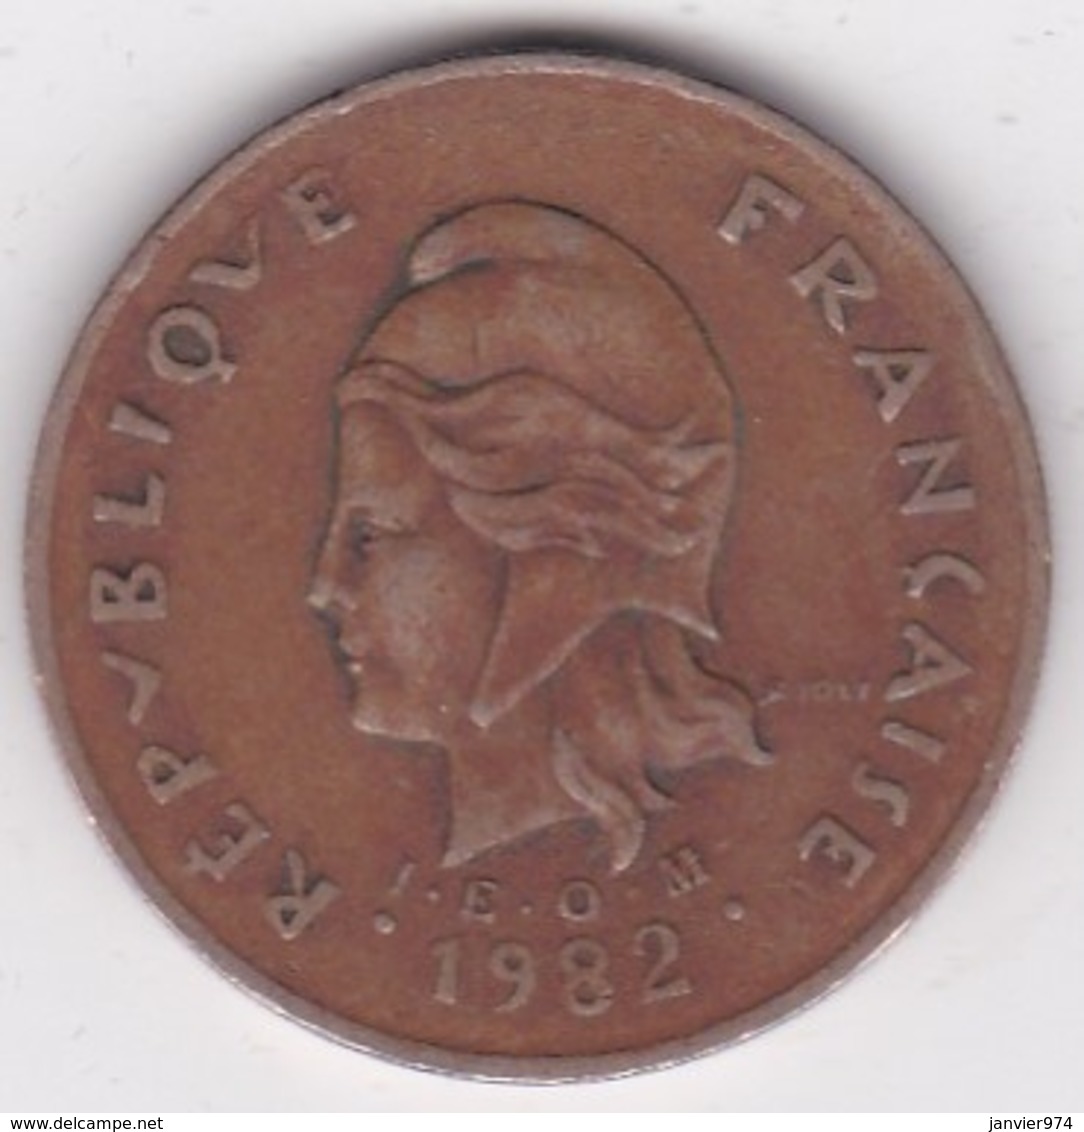 Polynésie Francaise . 100 Francs 1982, Cupro-nickel-aluminium - Französisch-Polynesien